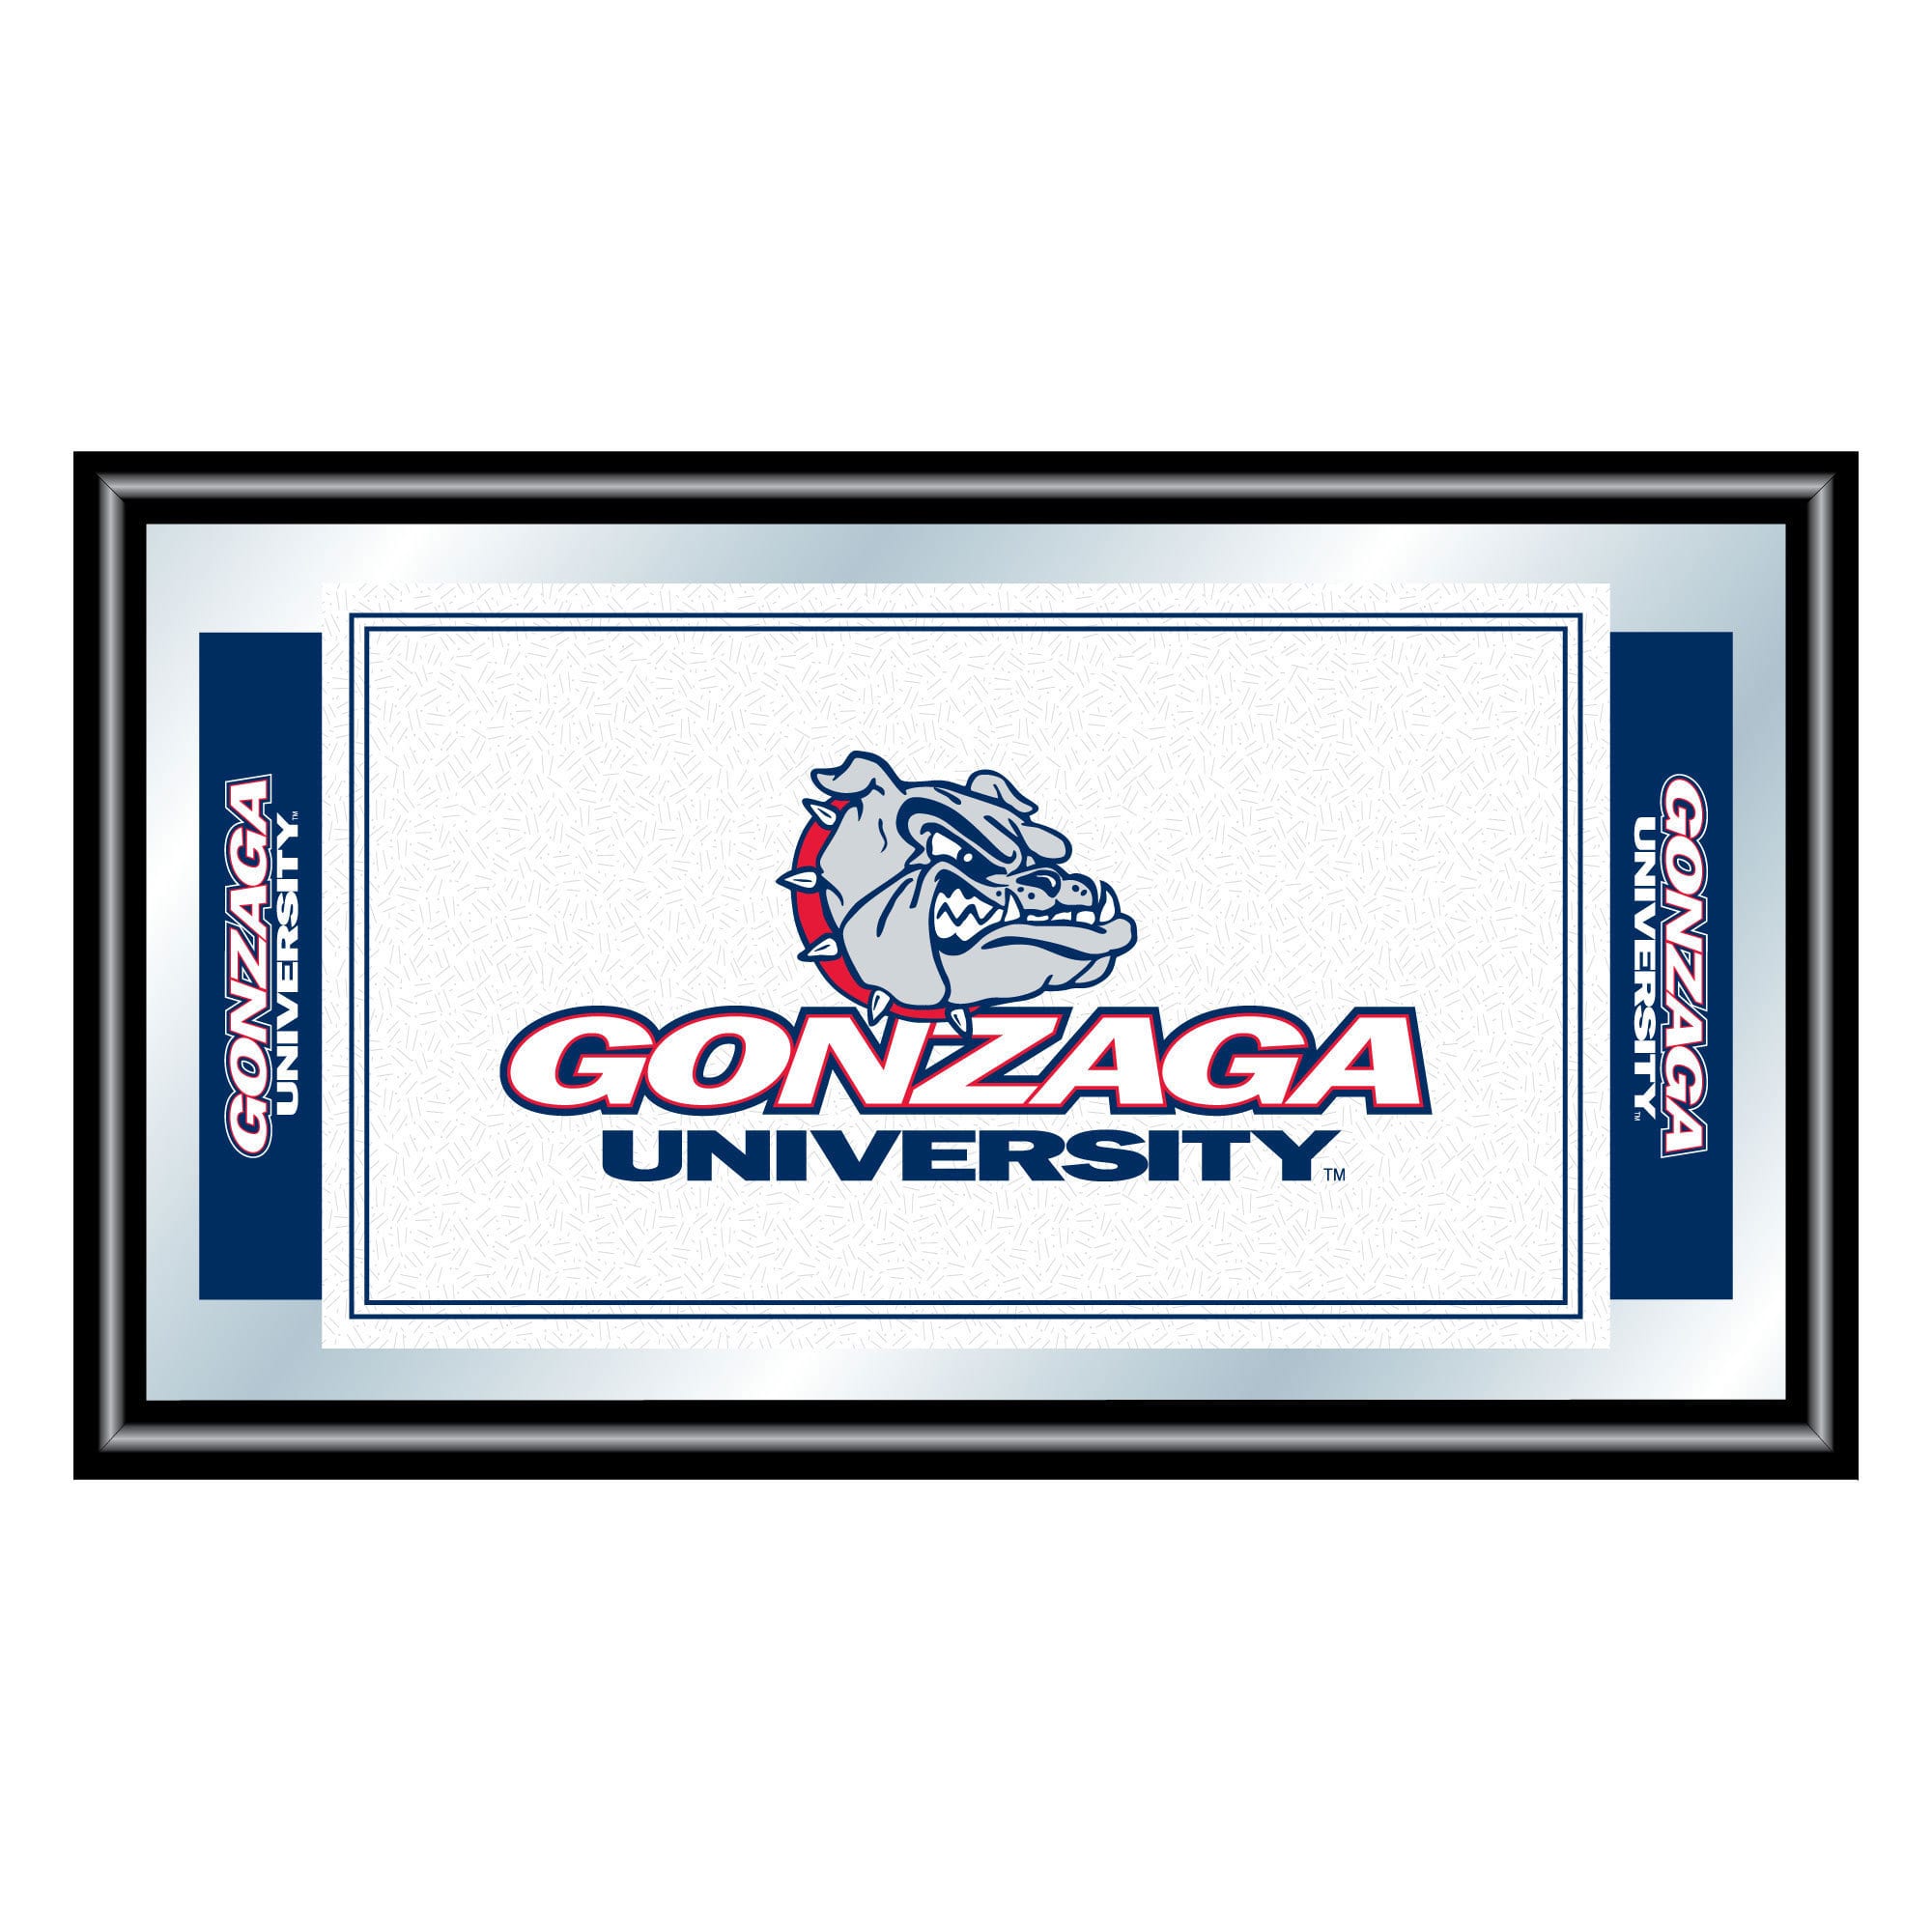 Trademark NCAA 15" x 26" x 3/4" Wooden Logo and Mascot Framed Mirror, Gonzaga University - image 2 of 2